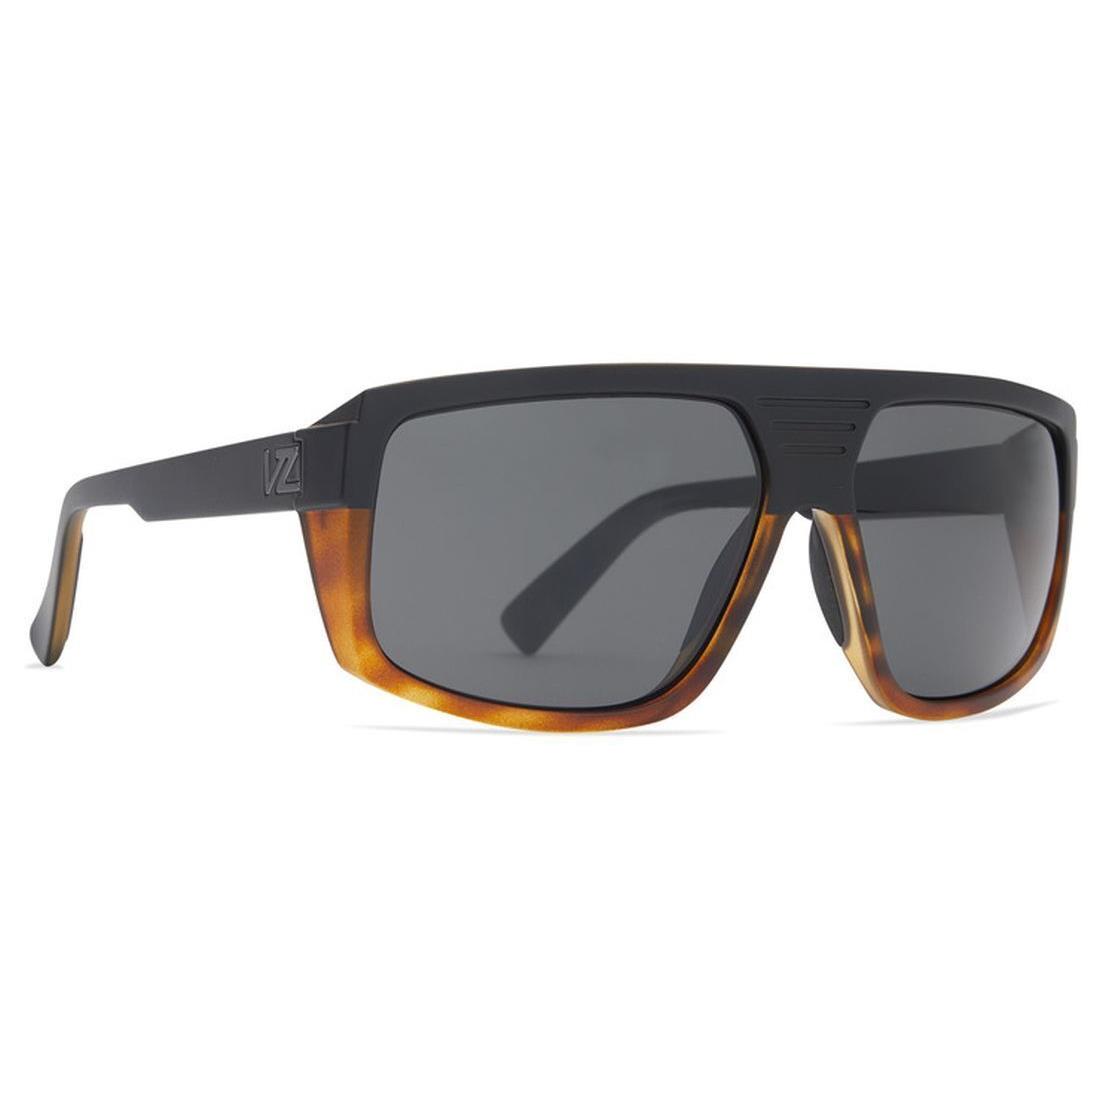 Vonzipper Quazzi Sunglasses Hardline Black Tort with Vintage Grey Lens